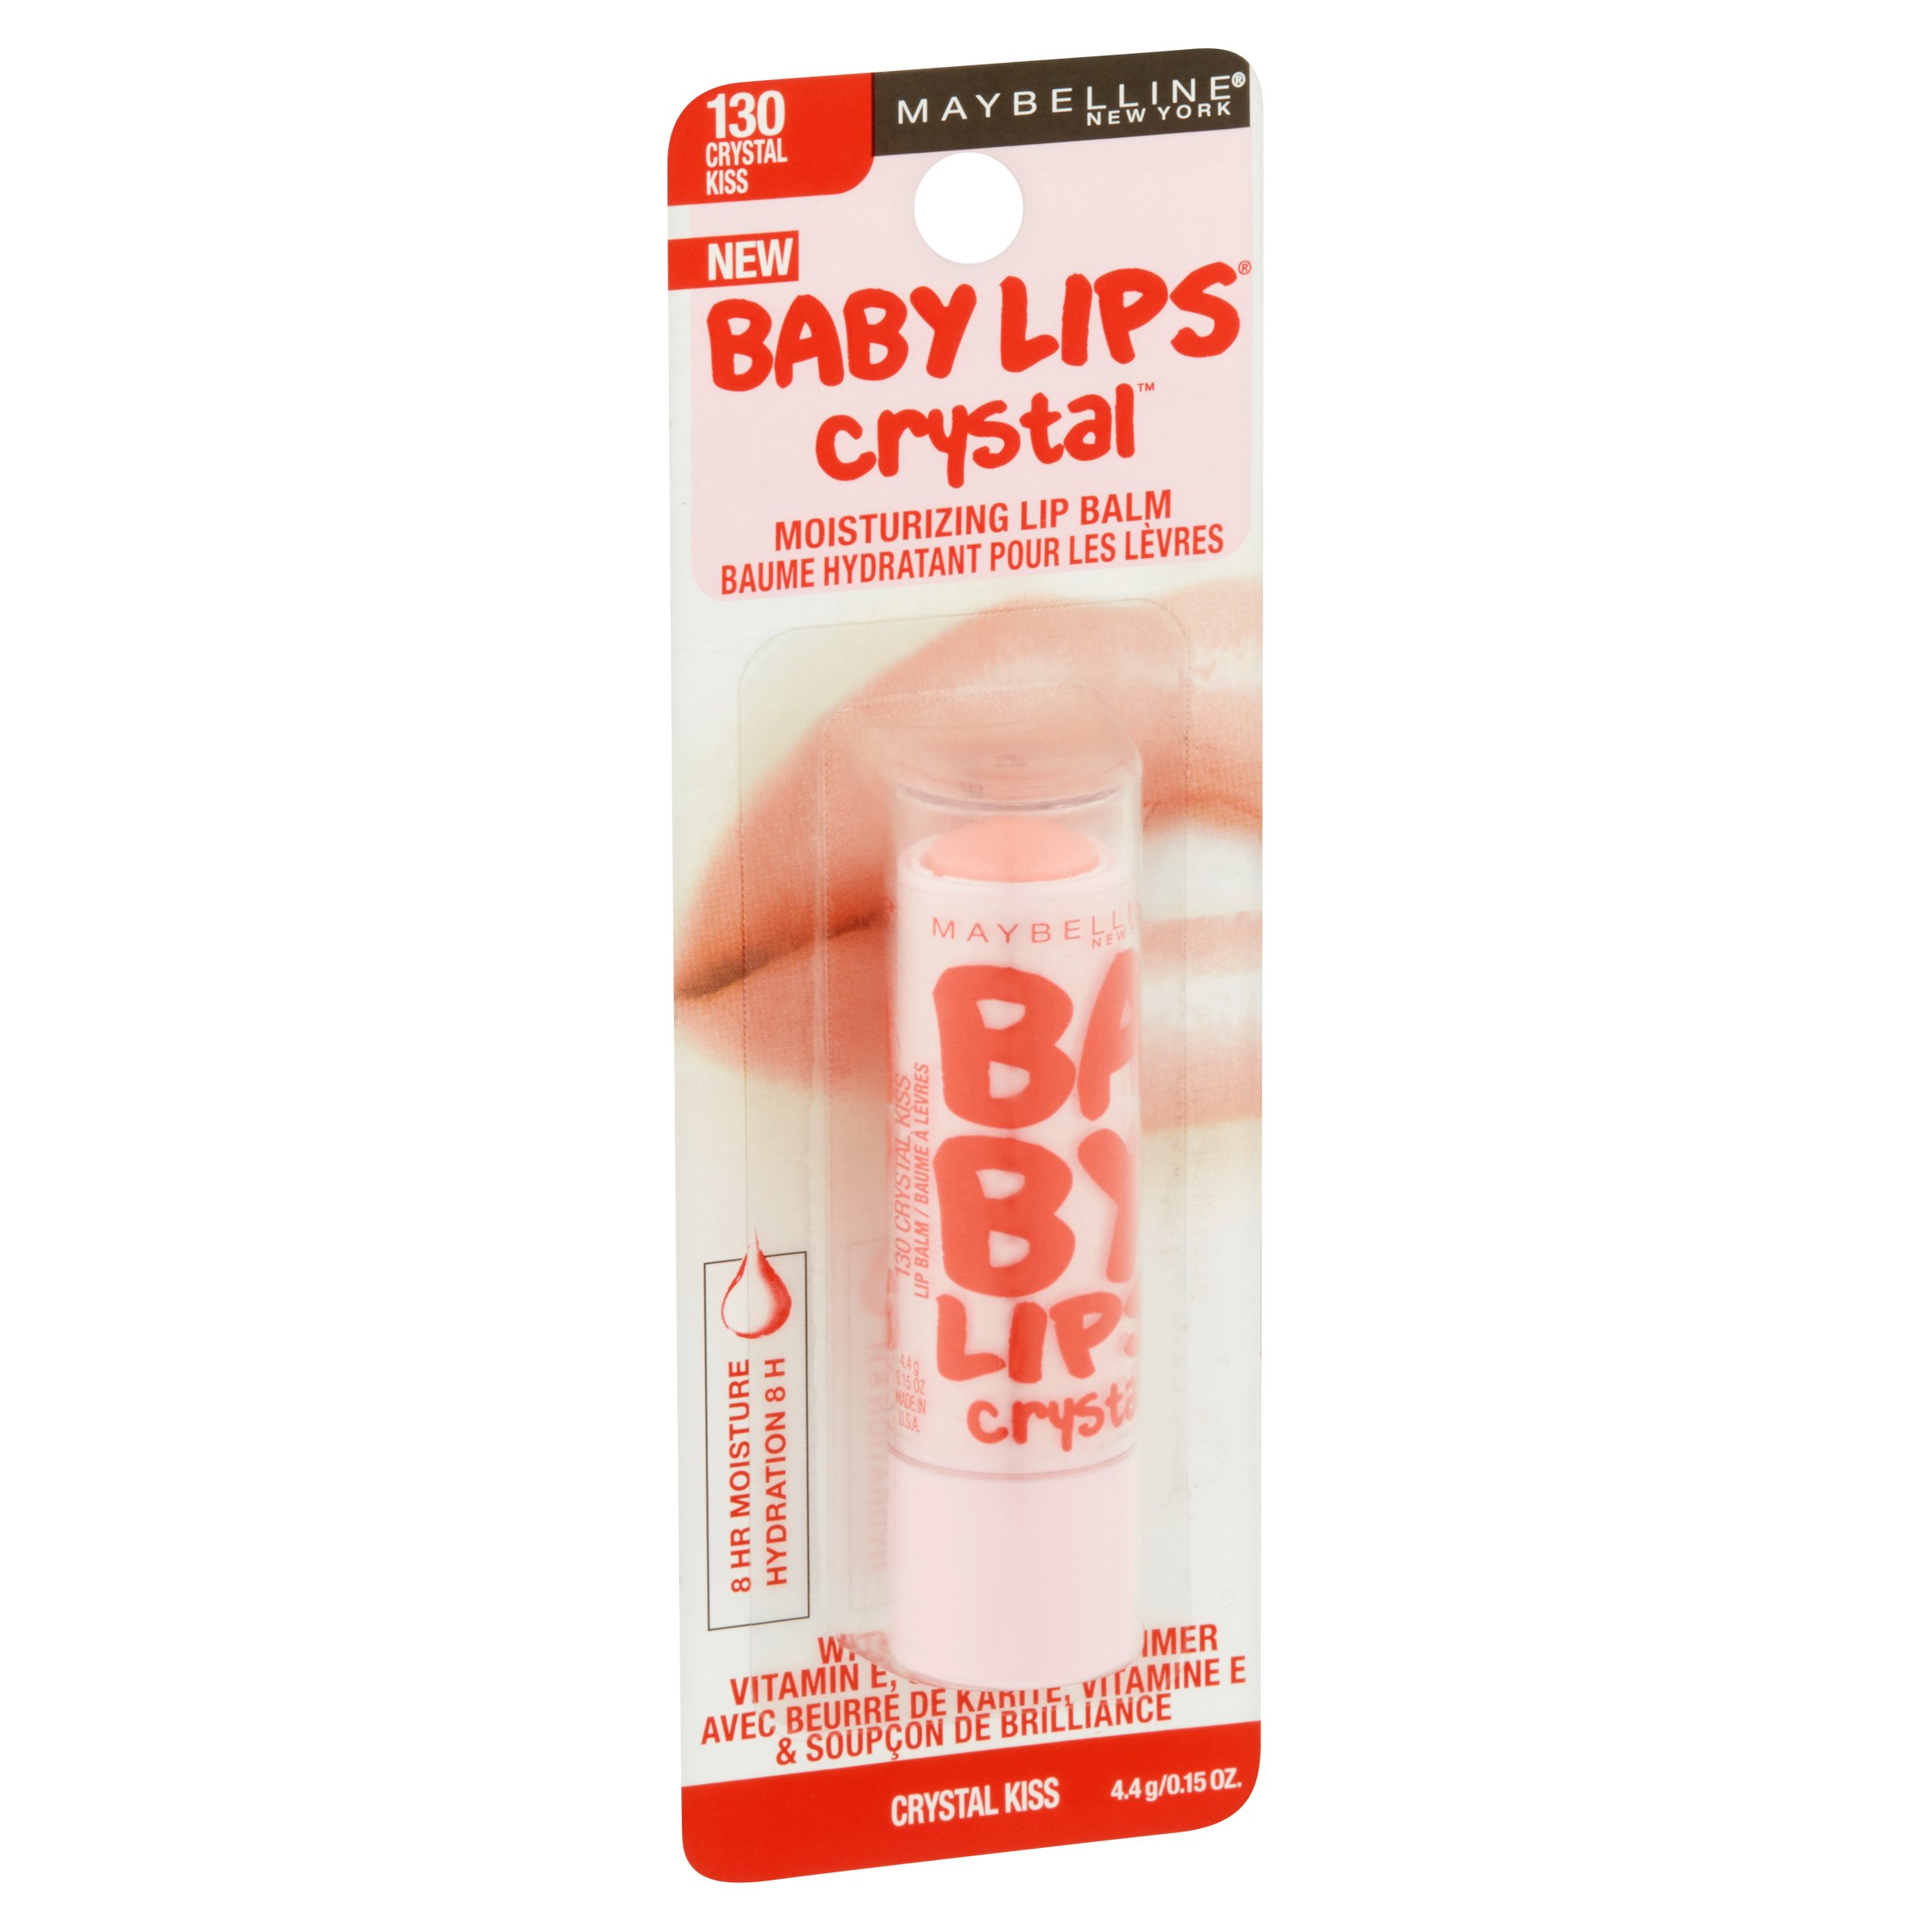 Maybelline Baby Lips Crystal Moisturizing Lip Balm - image 2 of 7